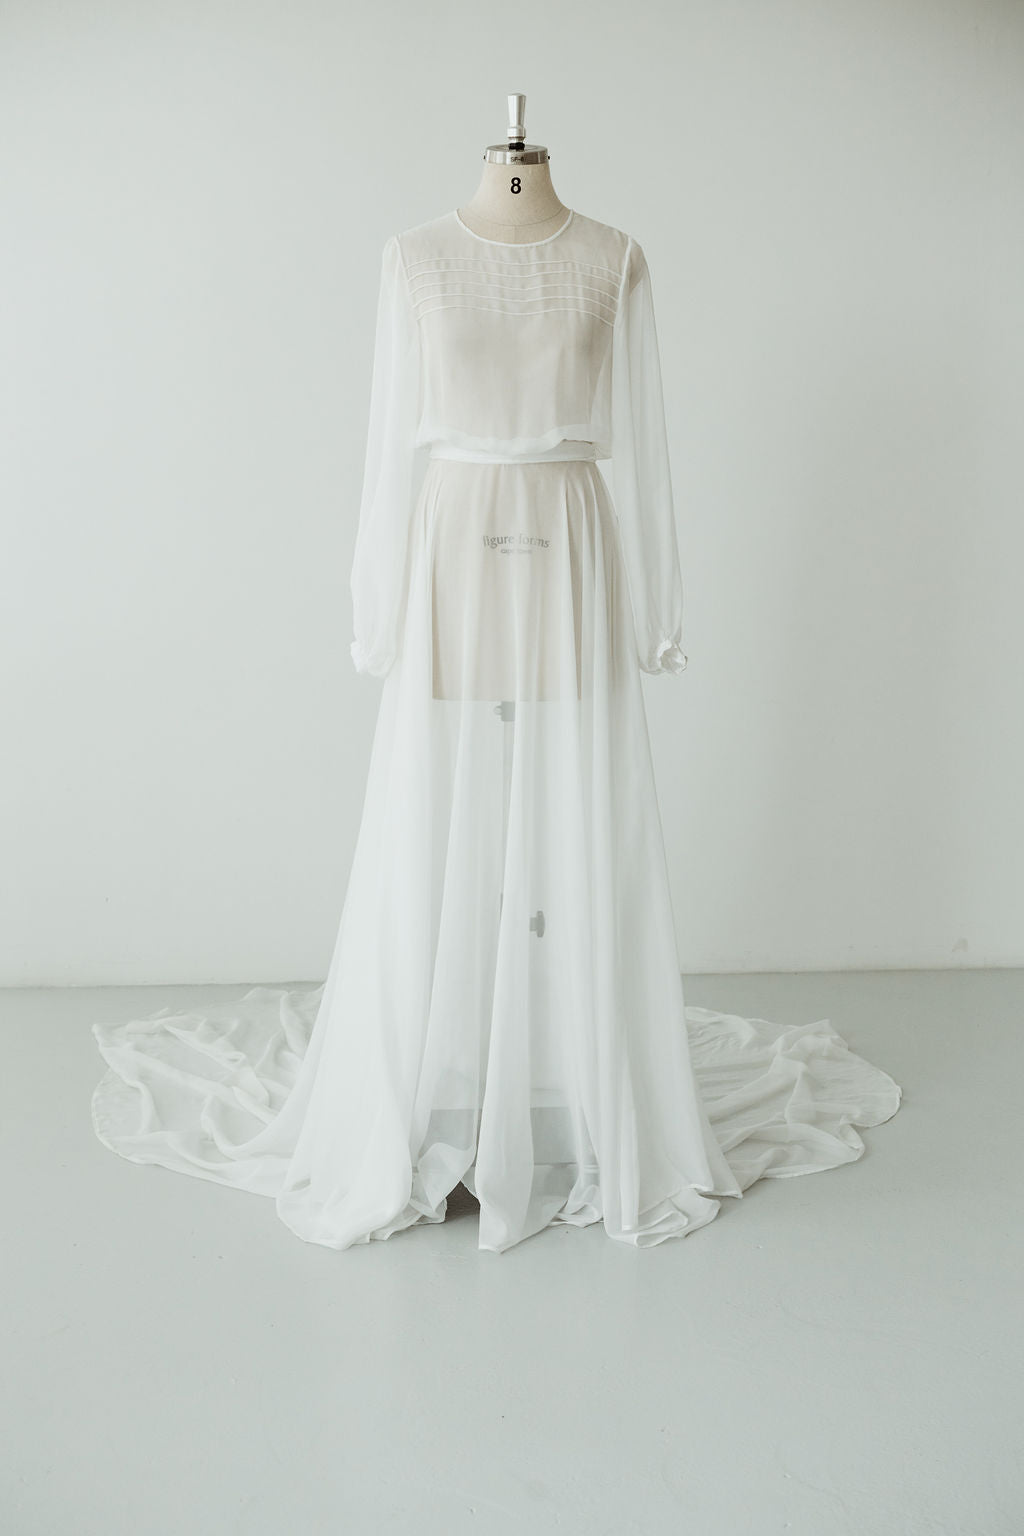 Antoine Over Dress | Dresses | Sadie Bosworth Atelier